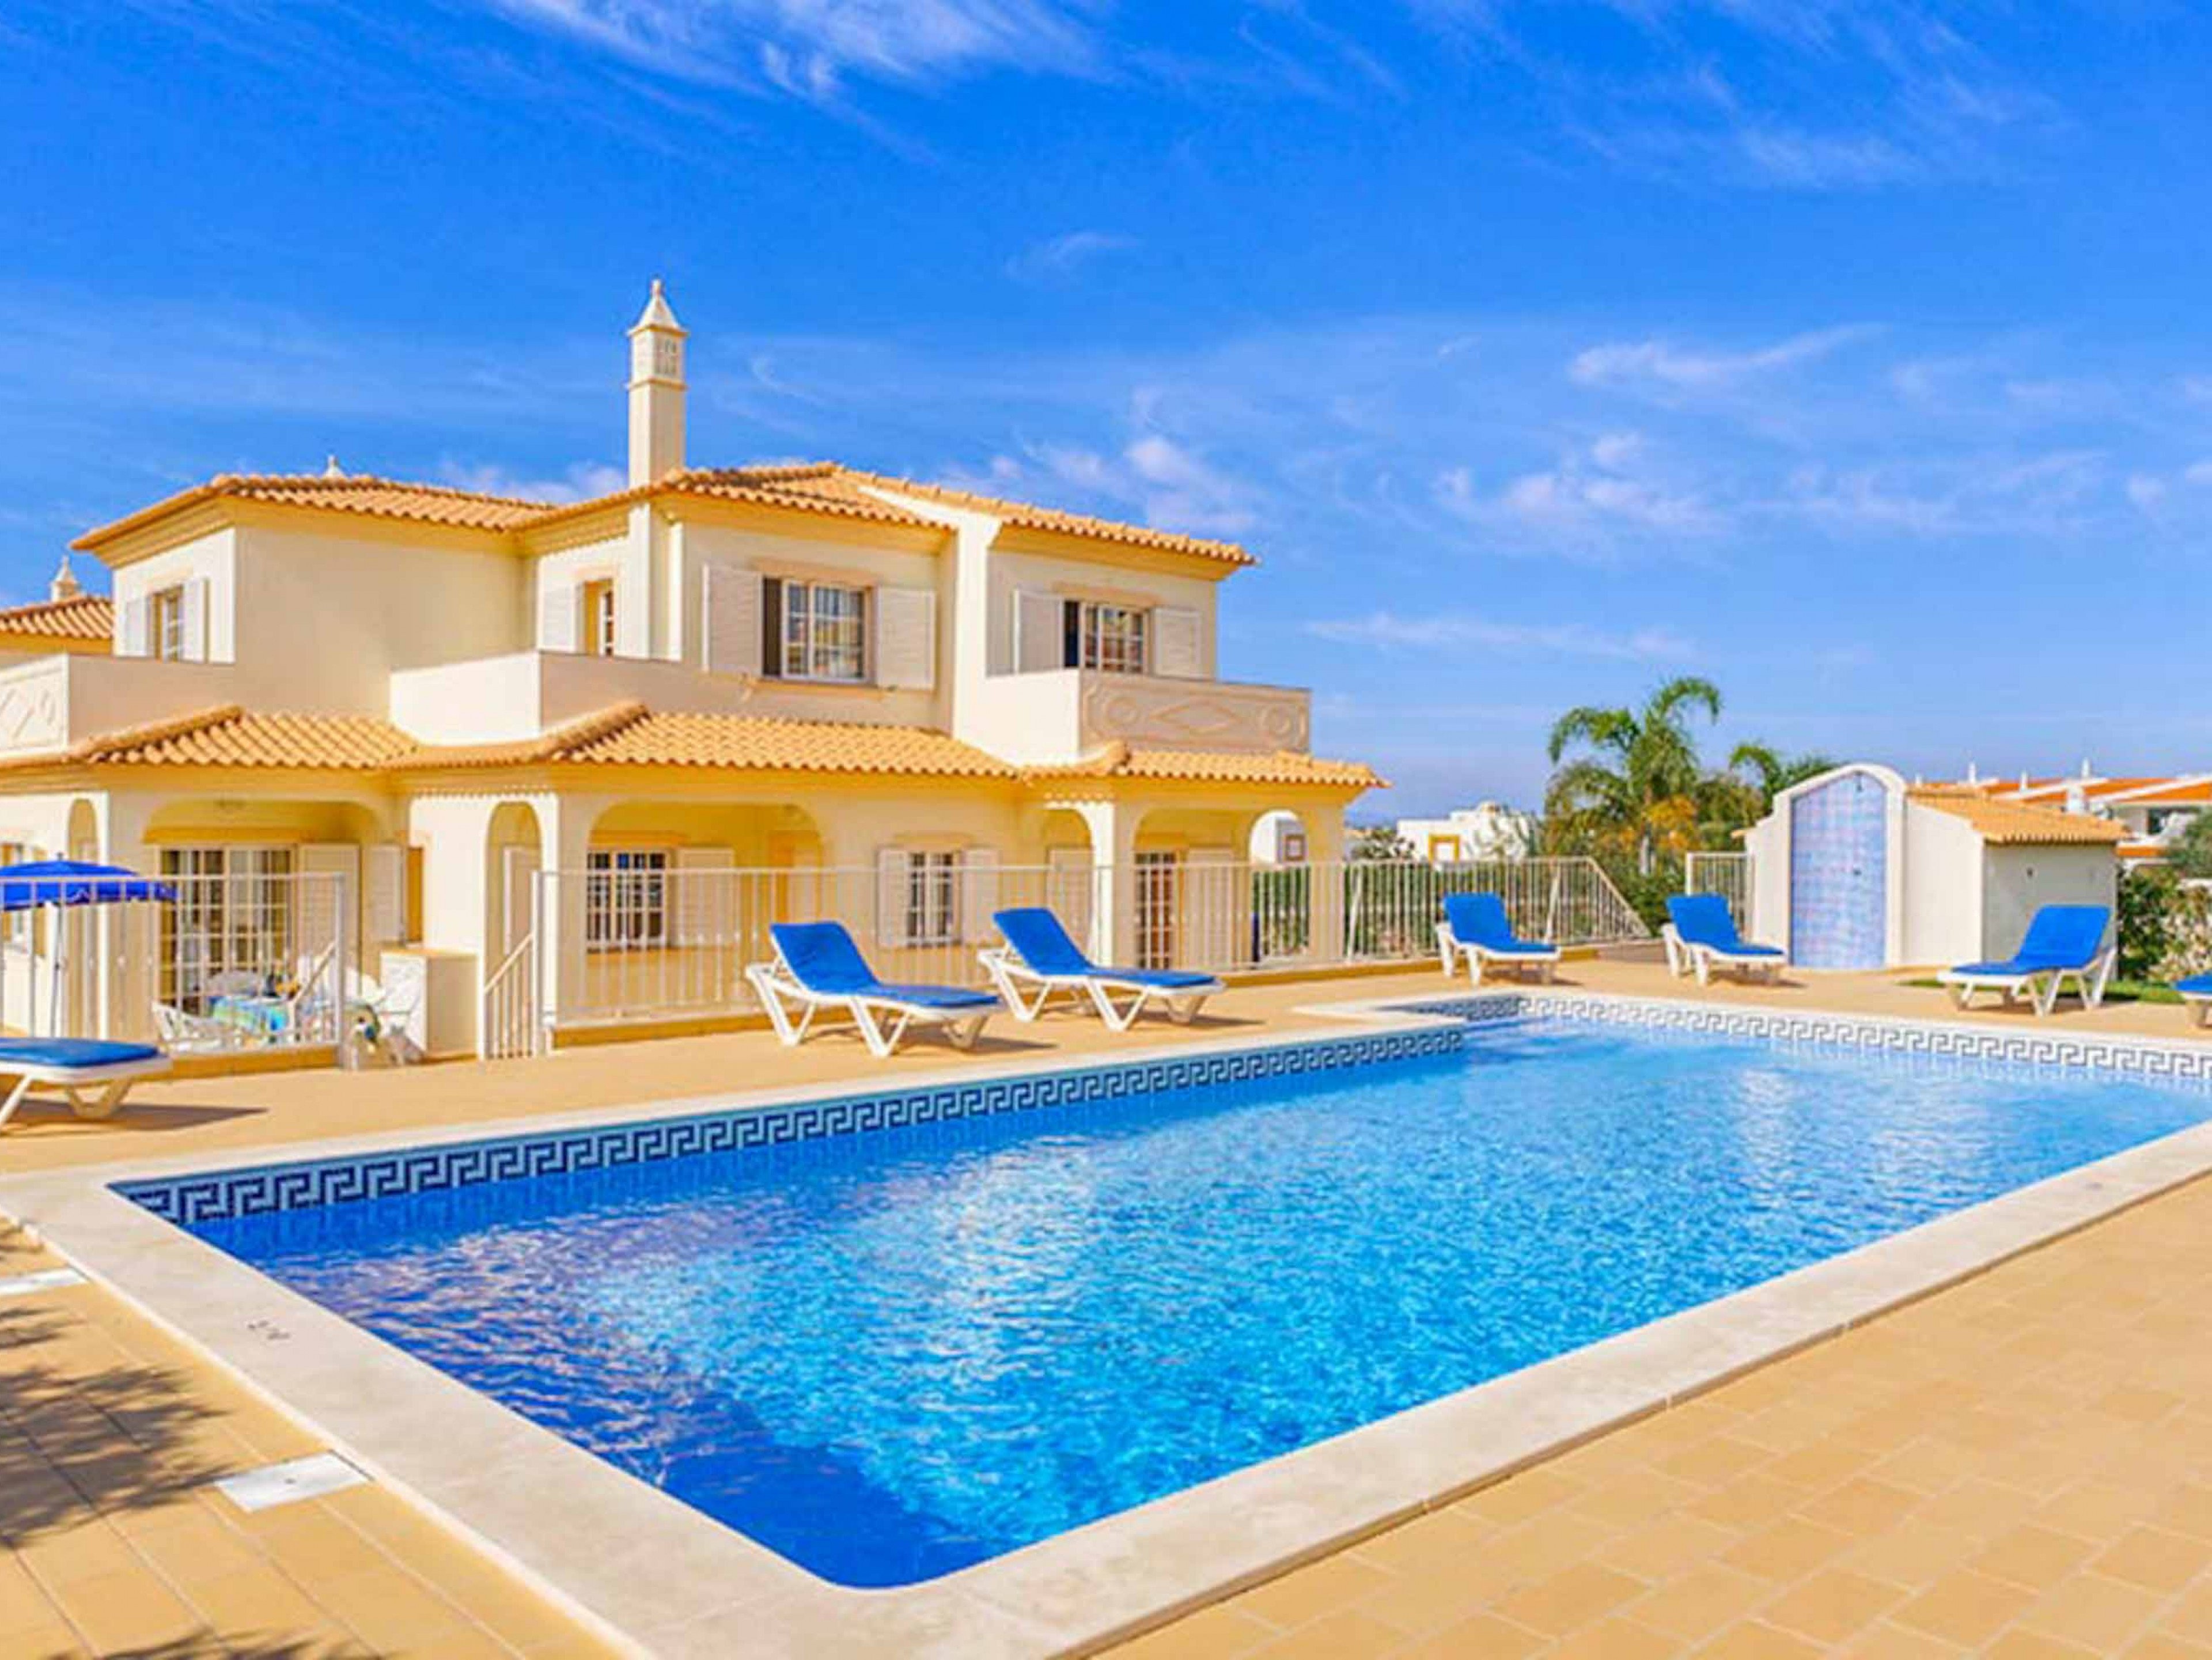 Villa Judite villas in Portugal with pools